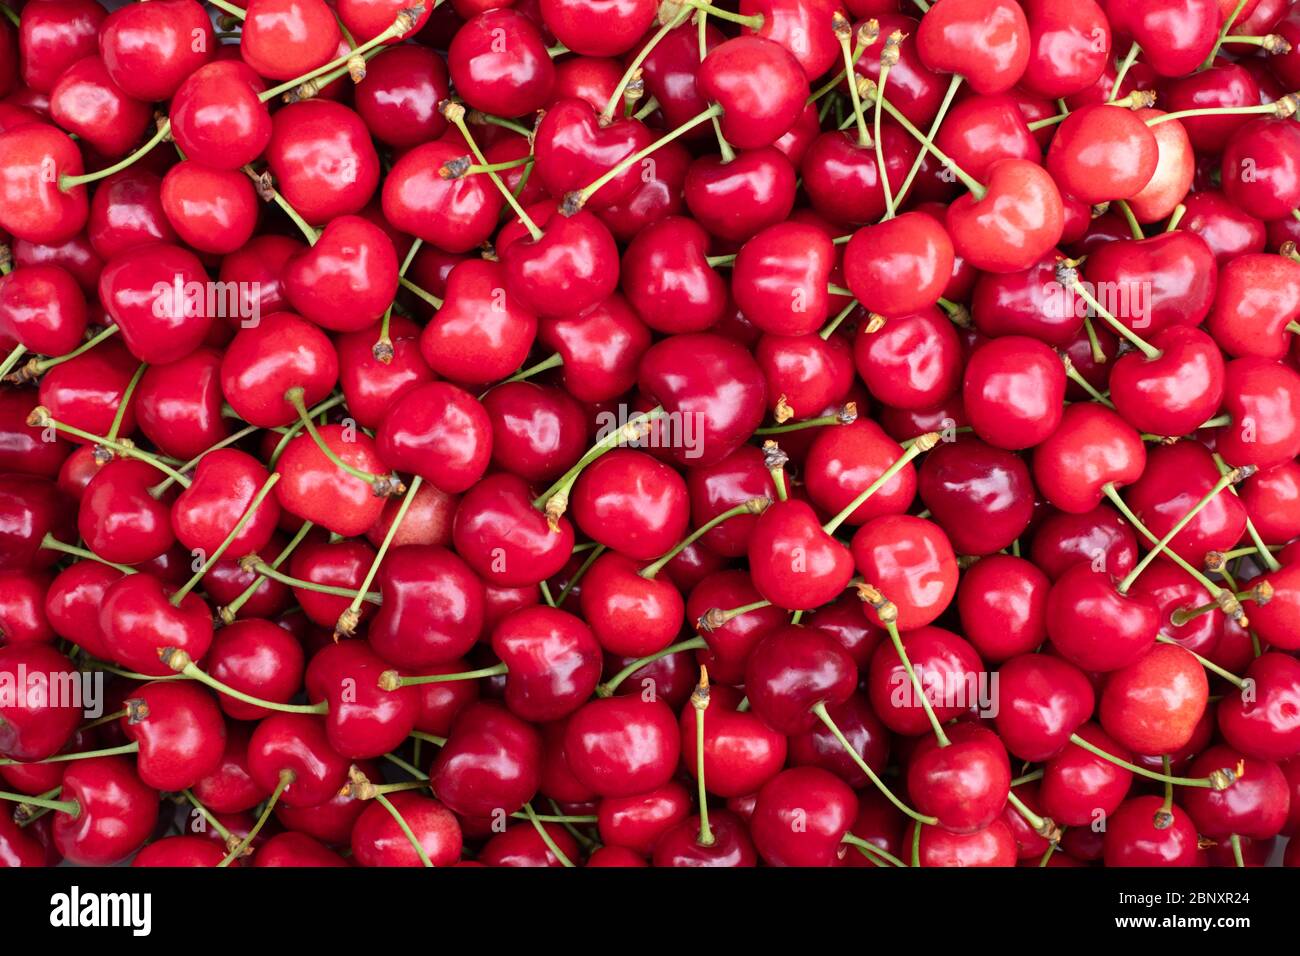 Cherry merry berry closep. Food photography Stock Photo